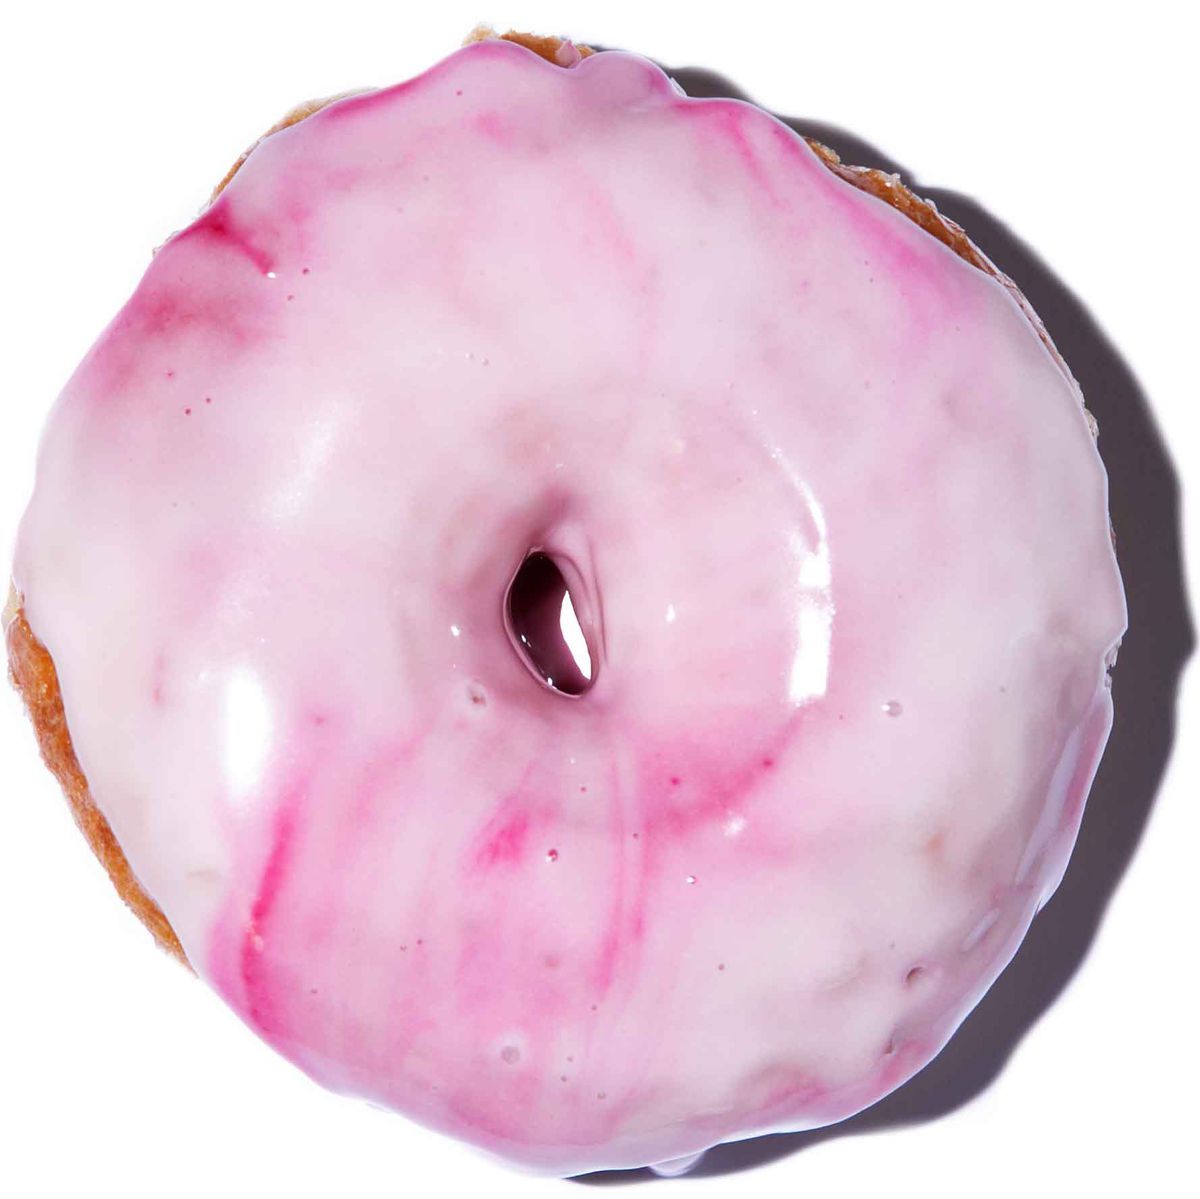 A vegan doughnut glazed with pink frosting